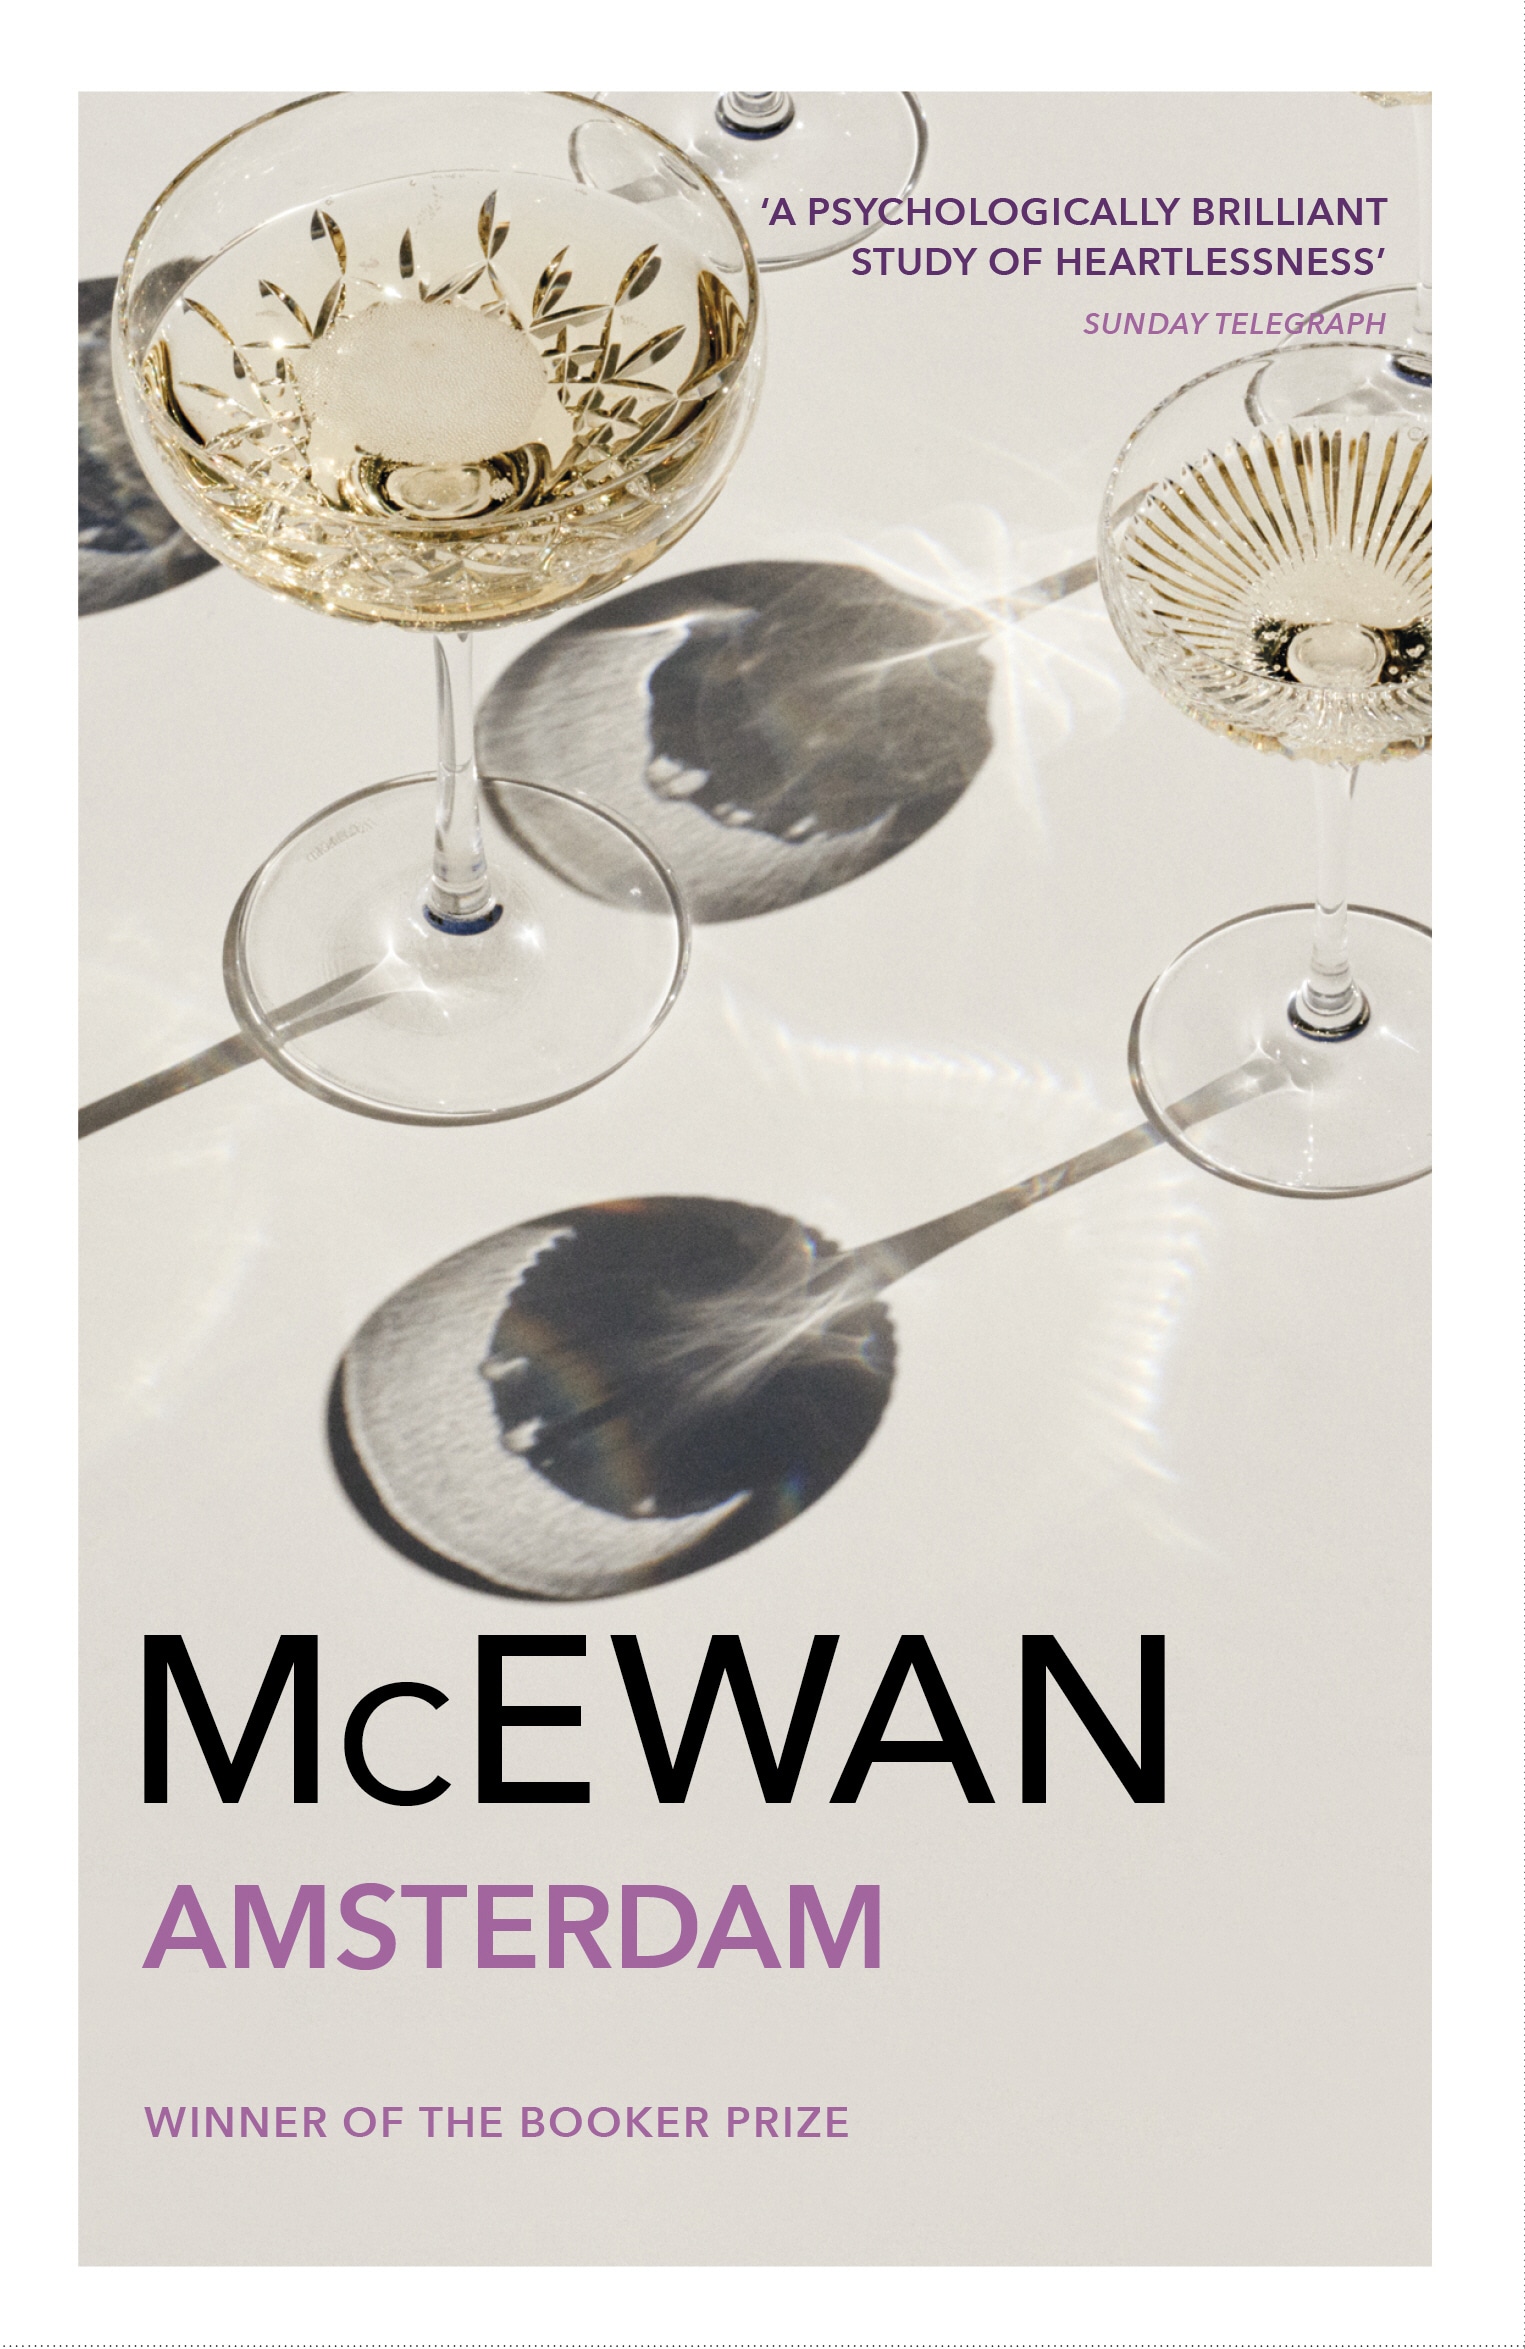 Book “Amsterdam” by Ian McEwan — April 29, 1999